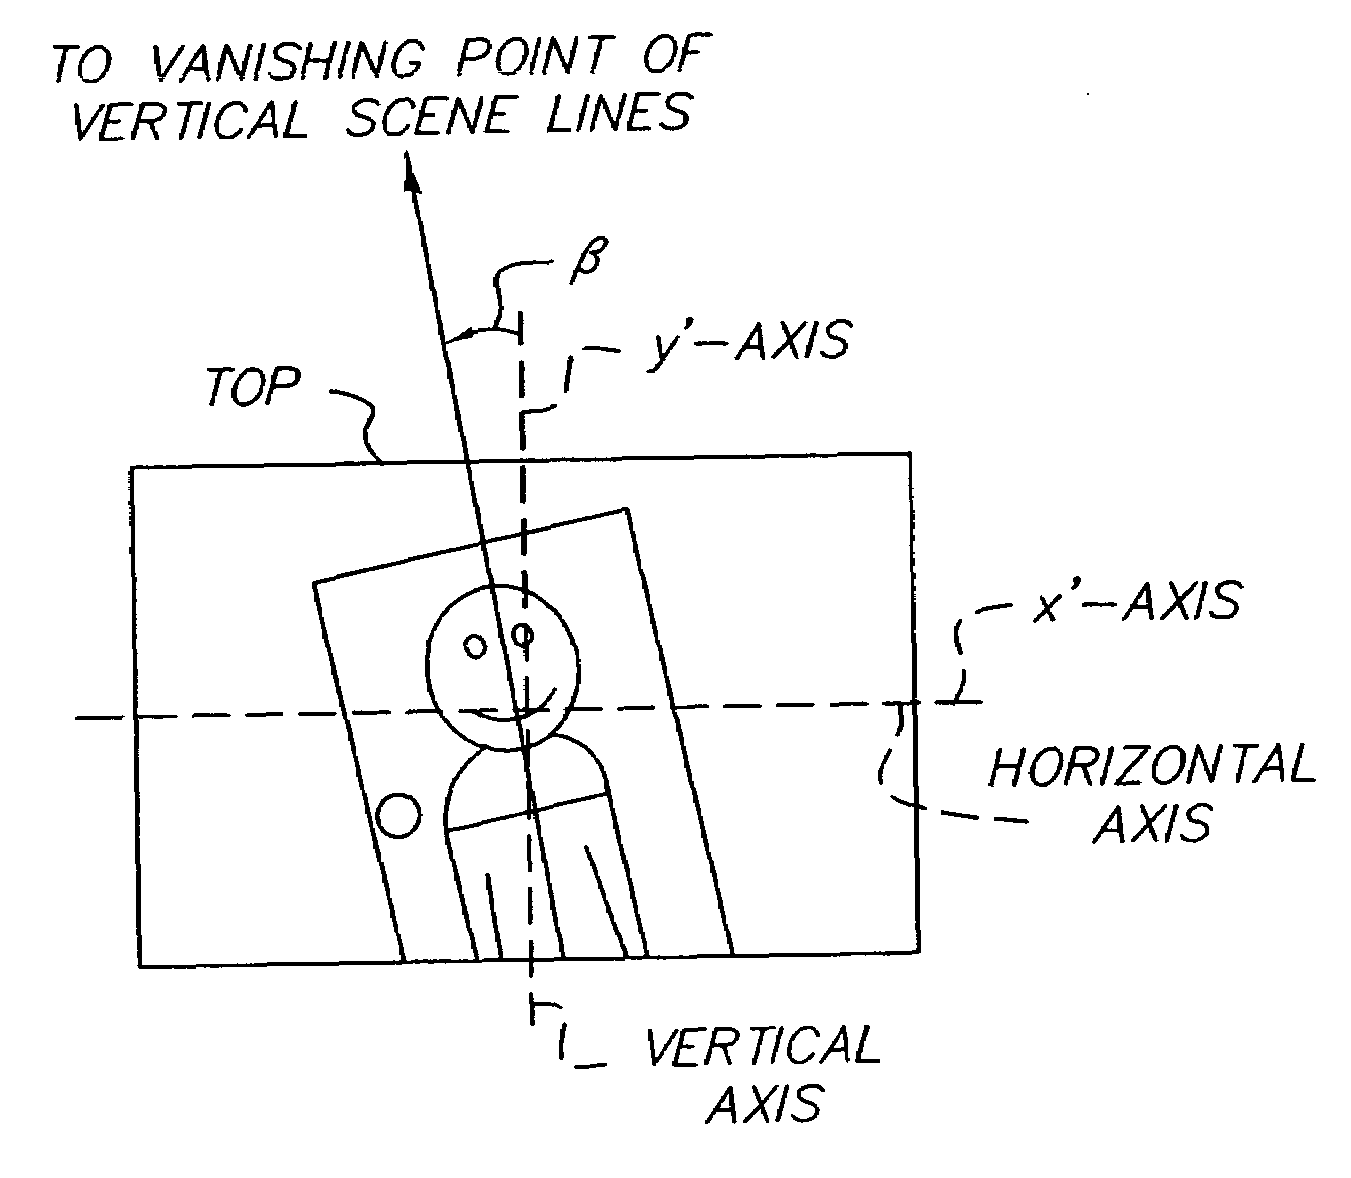 Method of estimating and correcting camera rotation with vanishing point location